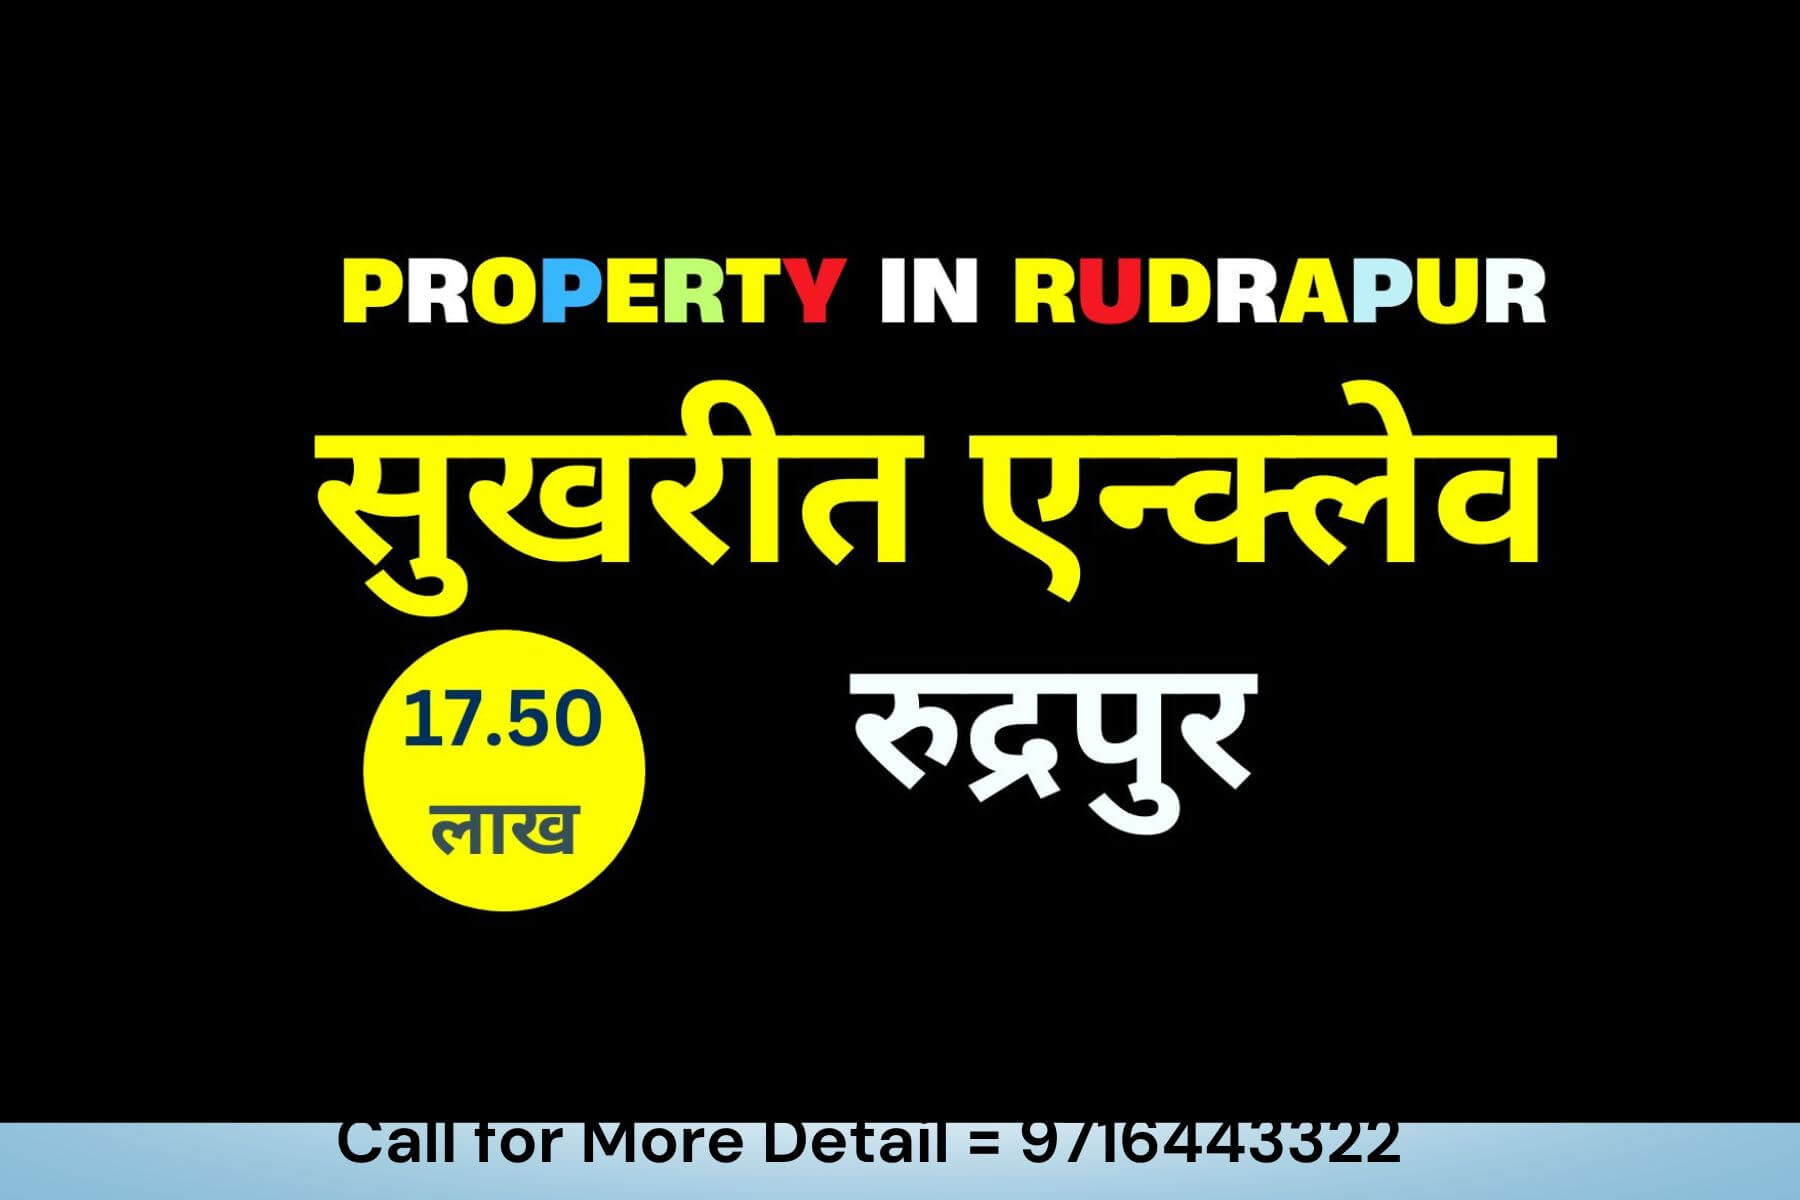 Property in Rudrapur